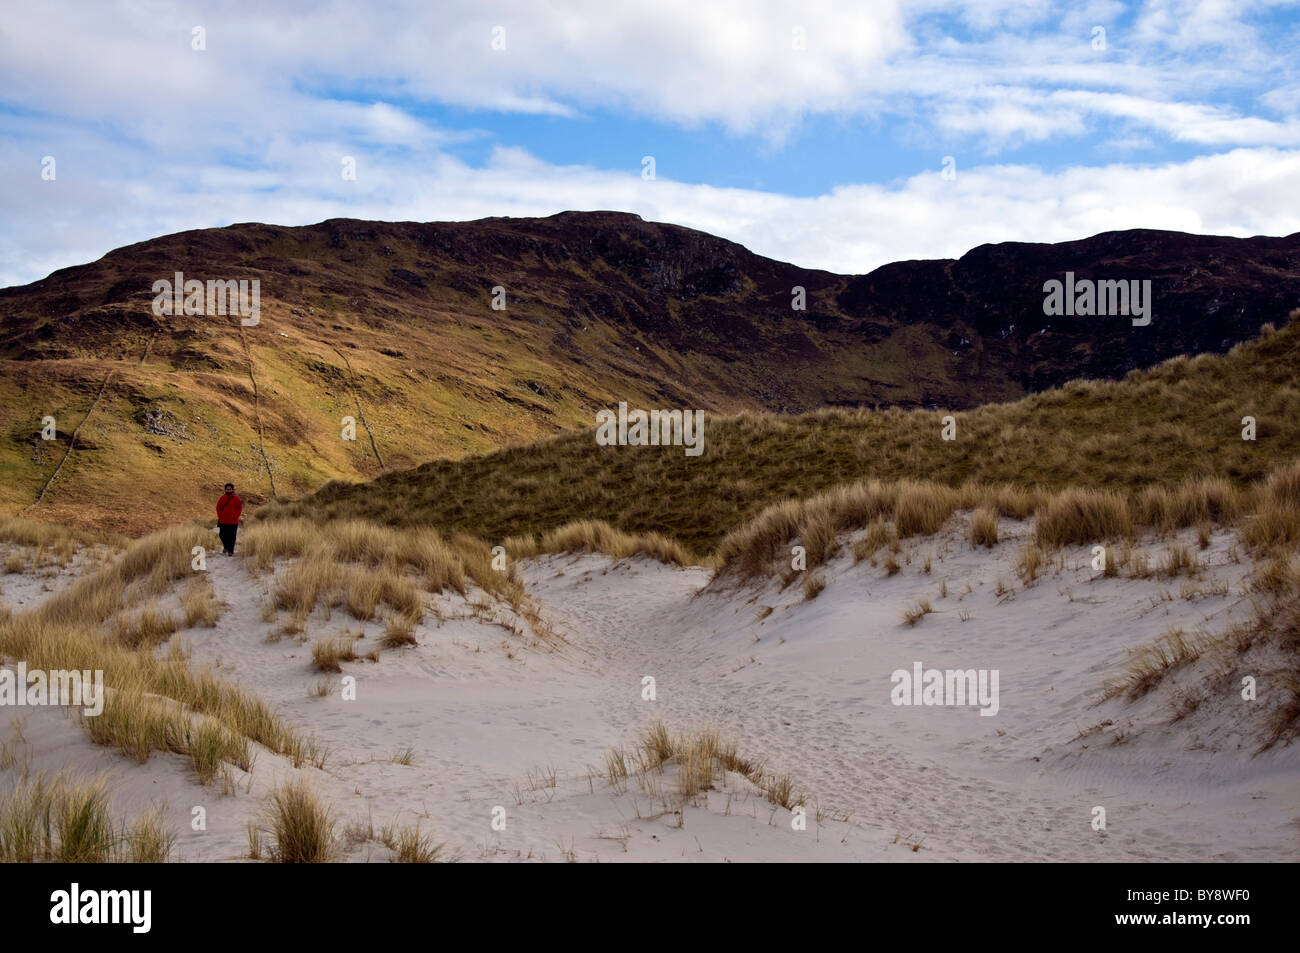 Woman walks alone on sand dunes on Atlantic Ocean coast Stock Photo